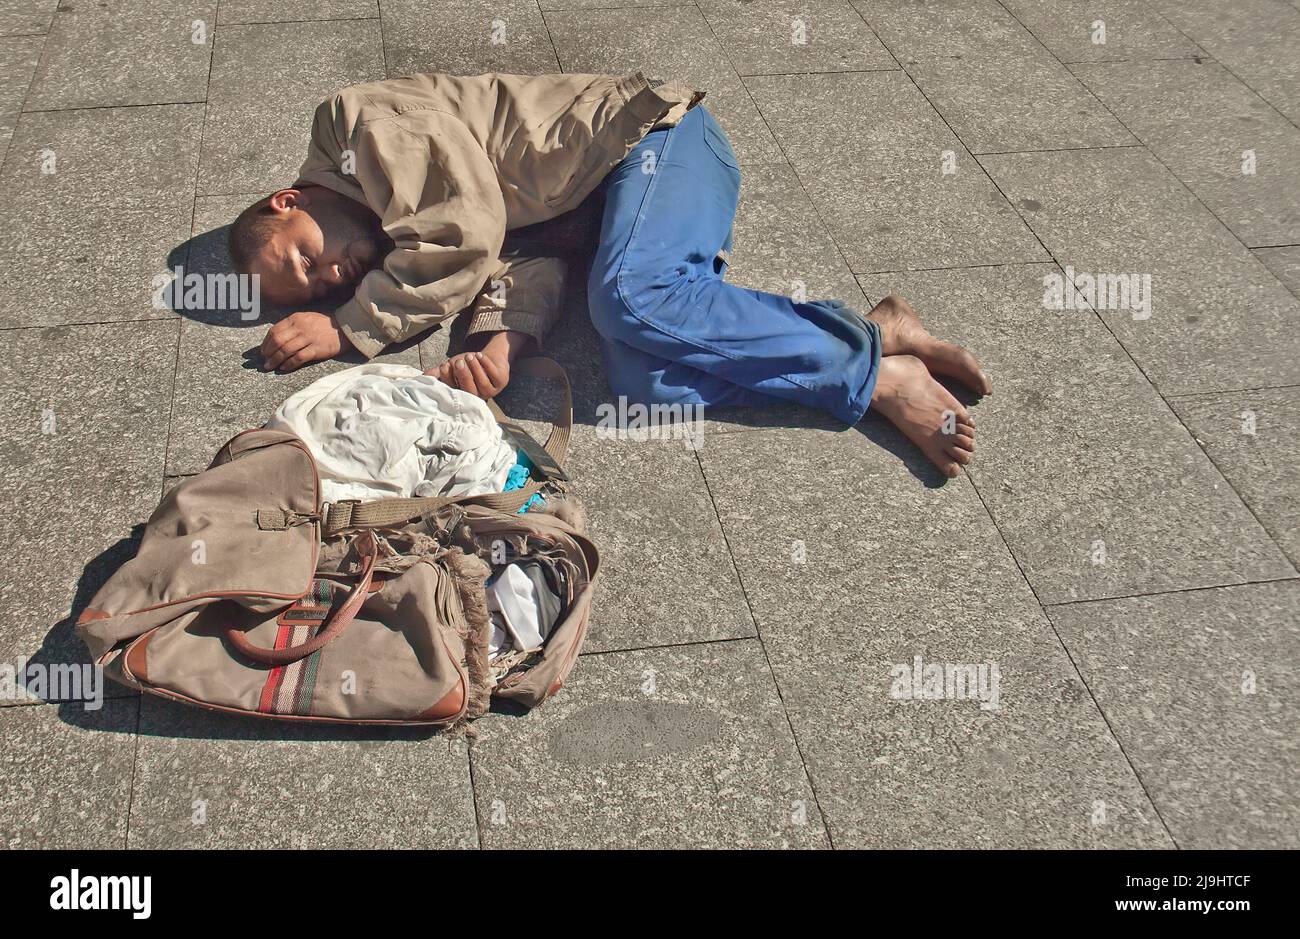 Barefoot man sleeping on ground in Sao Paulo, Brazil Stock Photo